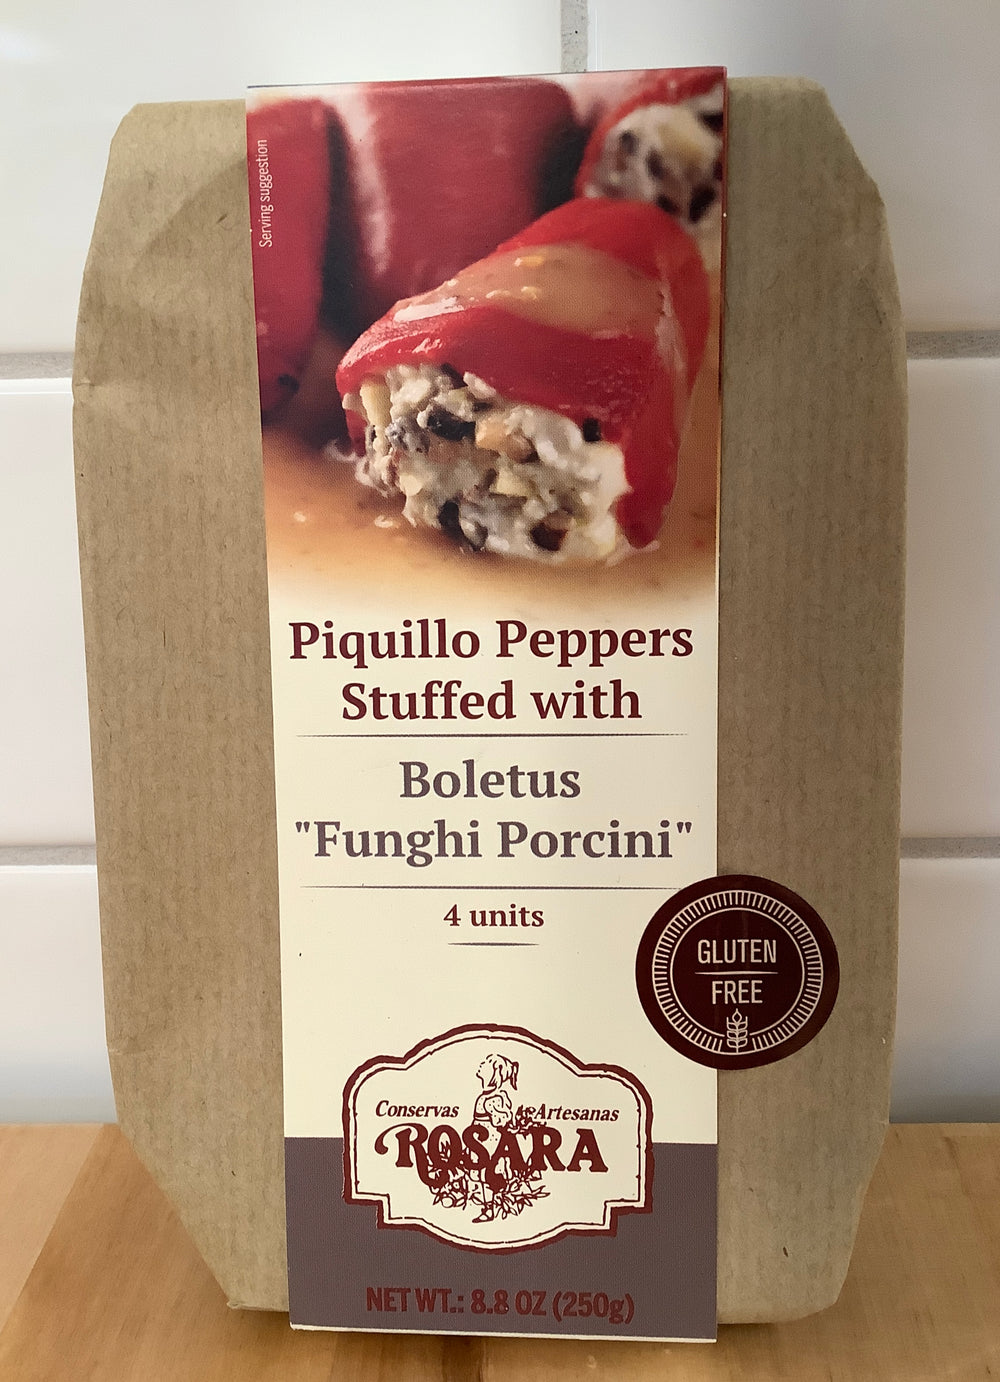 ROSARA Piquillo Peppers Stuffed With Boletus “Funghi Porcini”